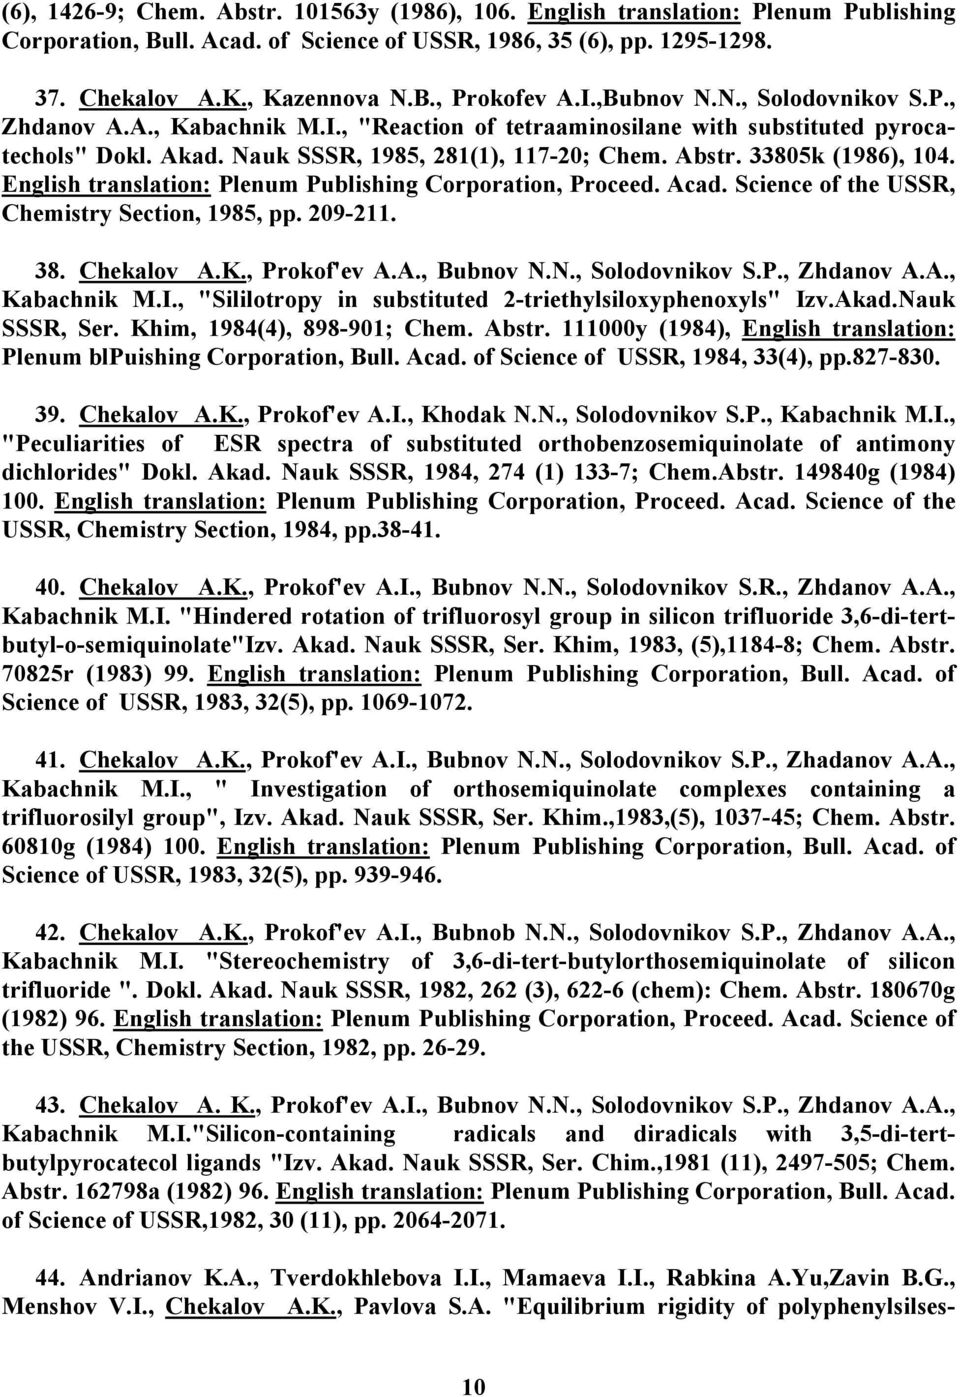 33805k (1986), 104. English translation: Plenum Publishing Corporation, Proceed. Acad. Science of the USSR, Chemistry Section, 1985, pp. 209-211. 38. Chekalov A.K., Prokof'ev A.A., Bubnov N.